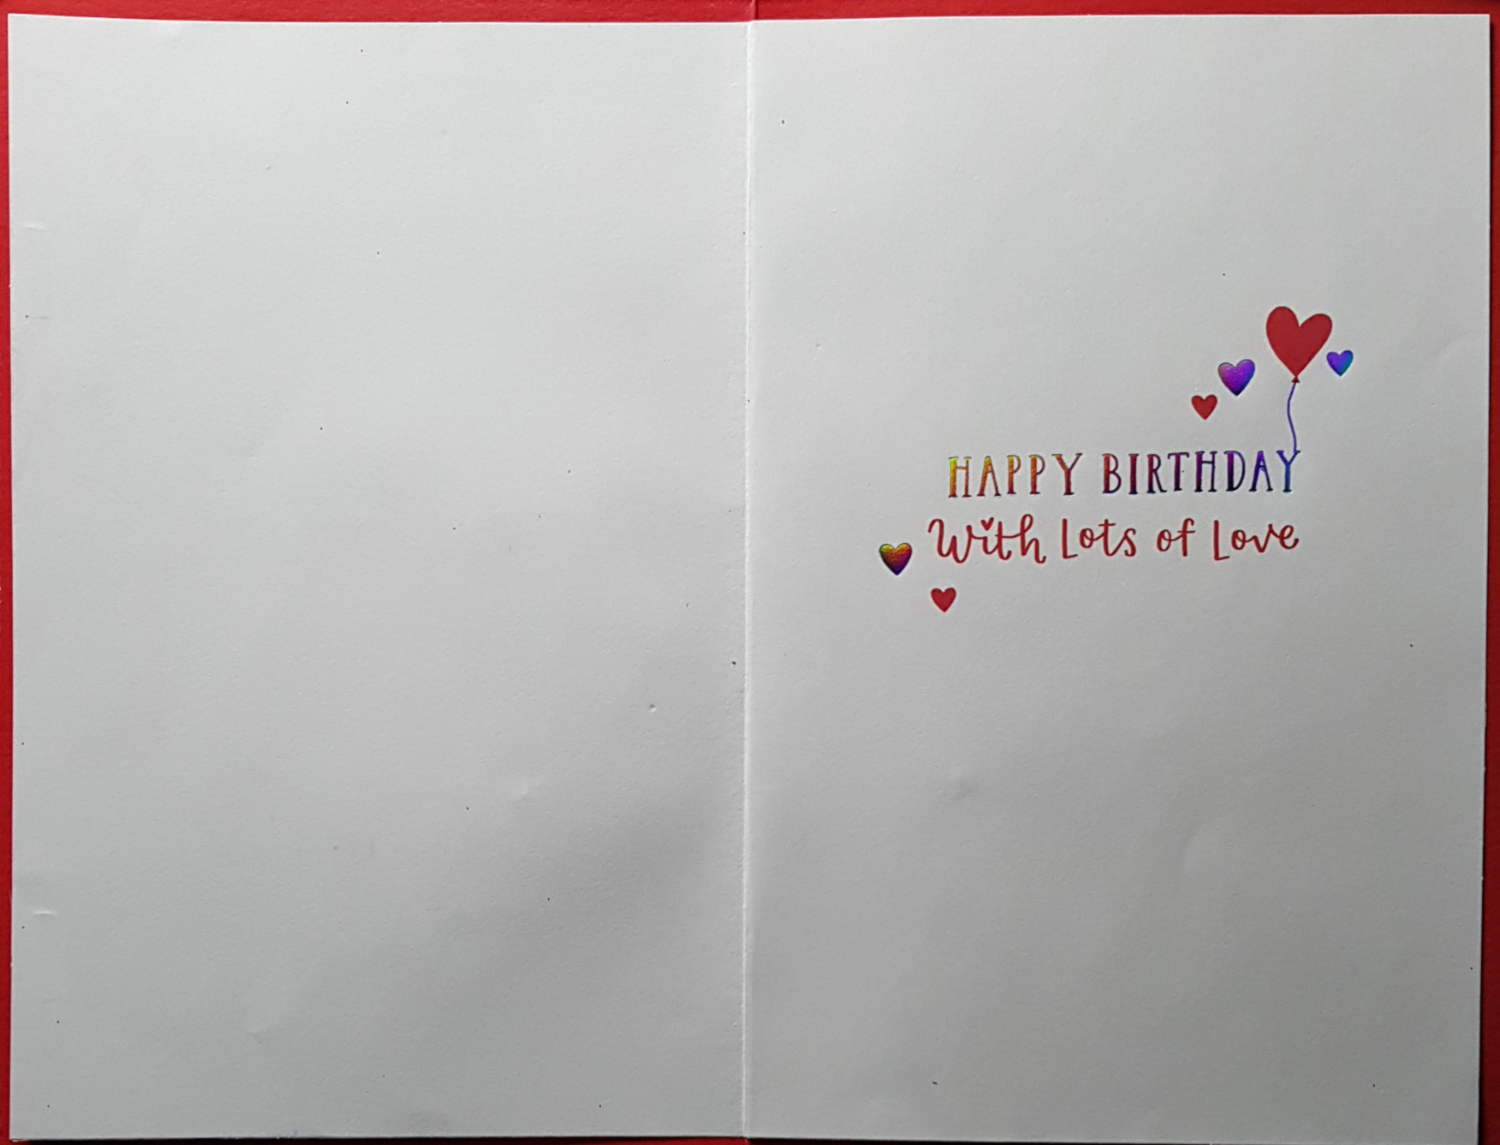 Birthday Card - Boyfriend / Gold & Silver Hearts On Blue Front